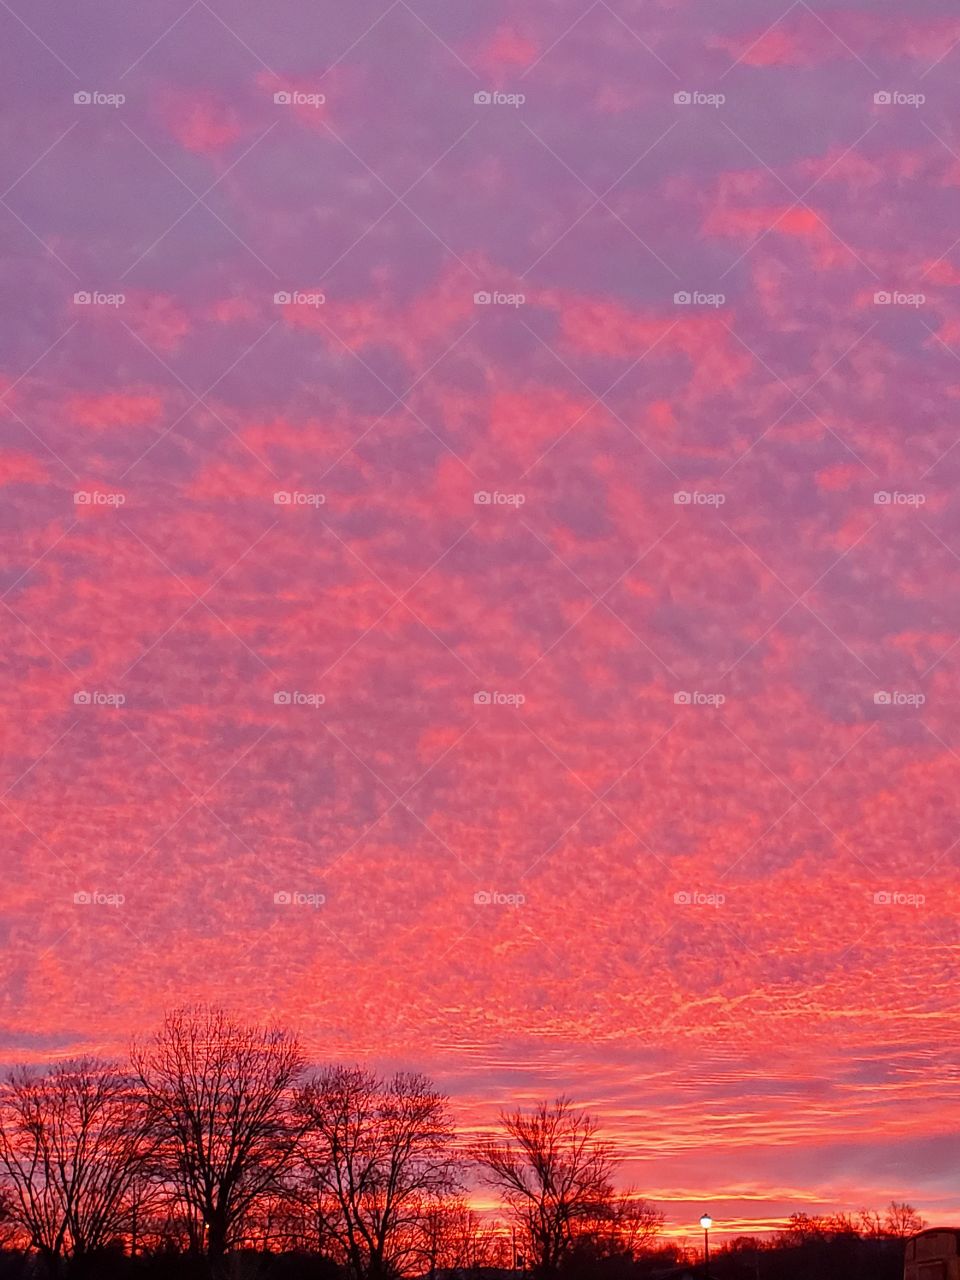 pink sunrise